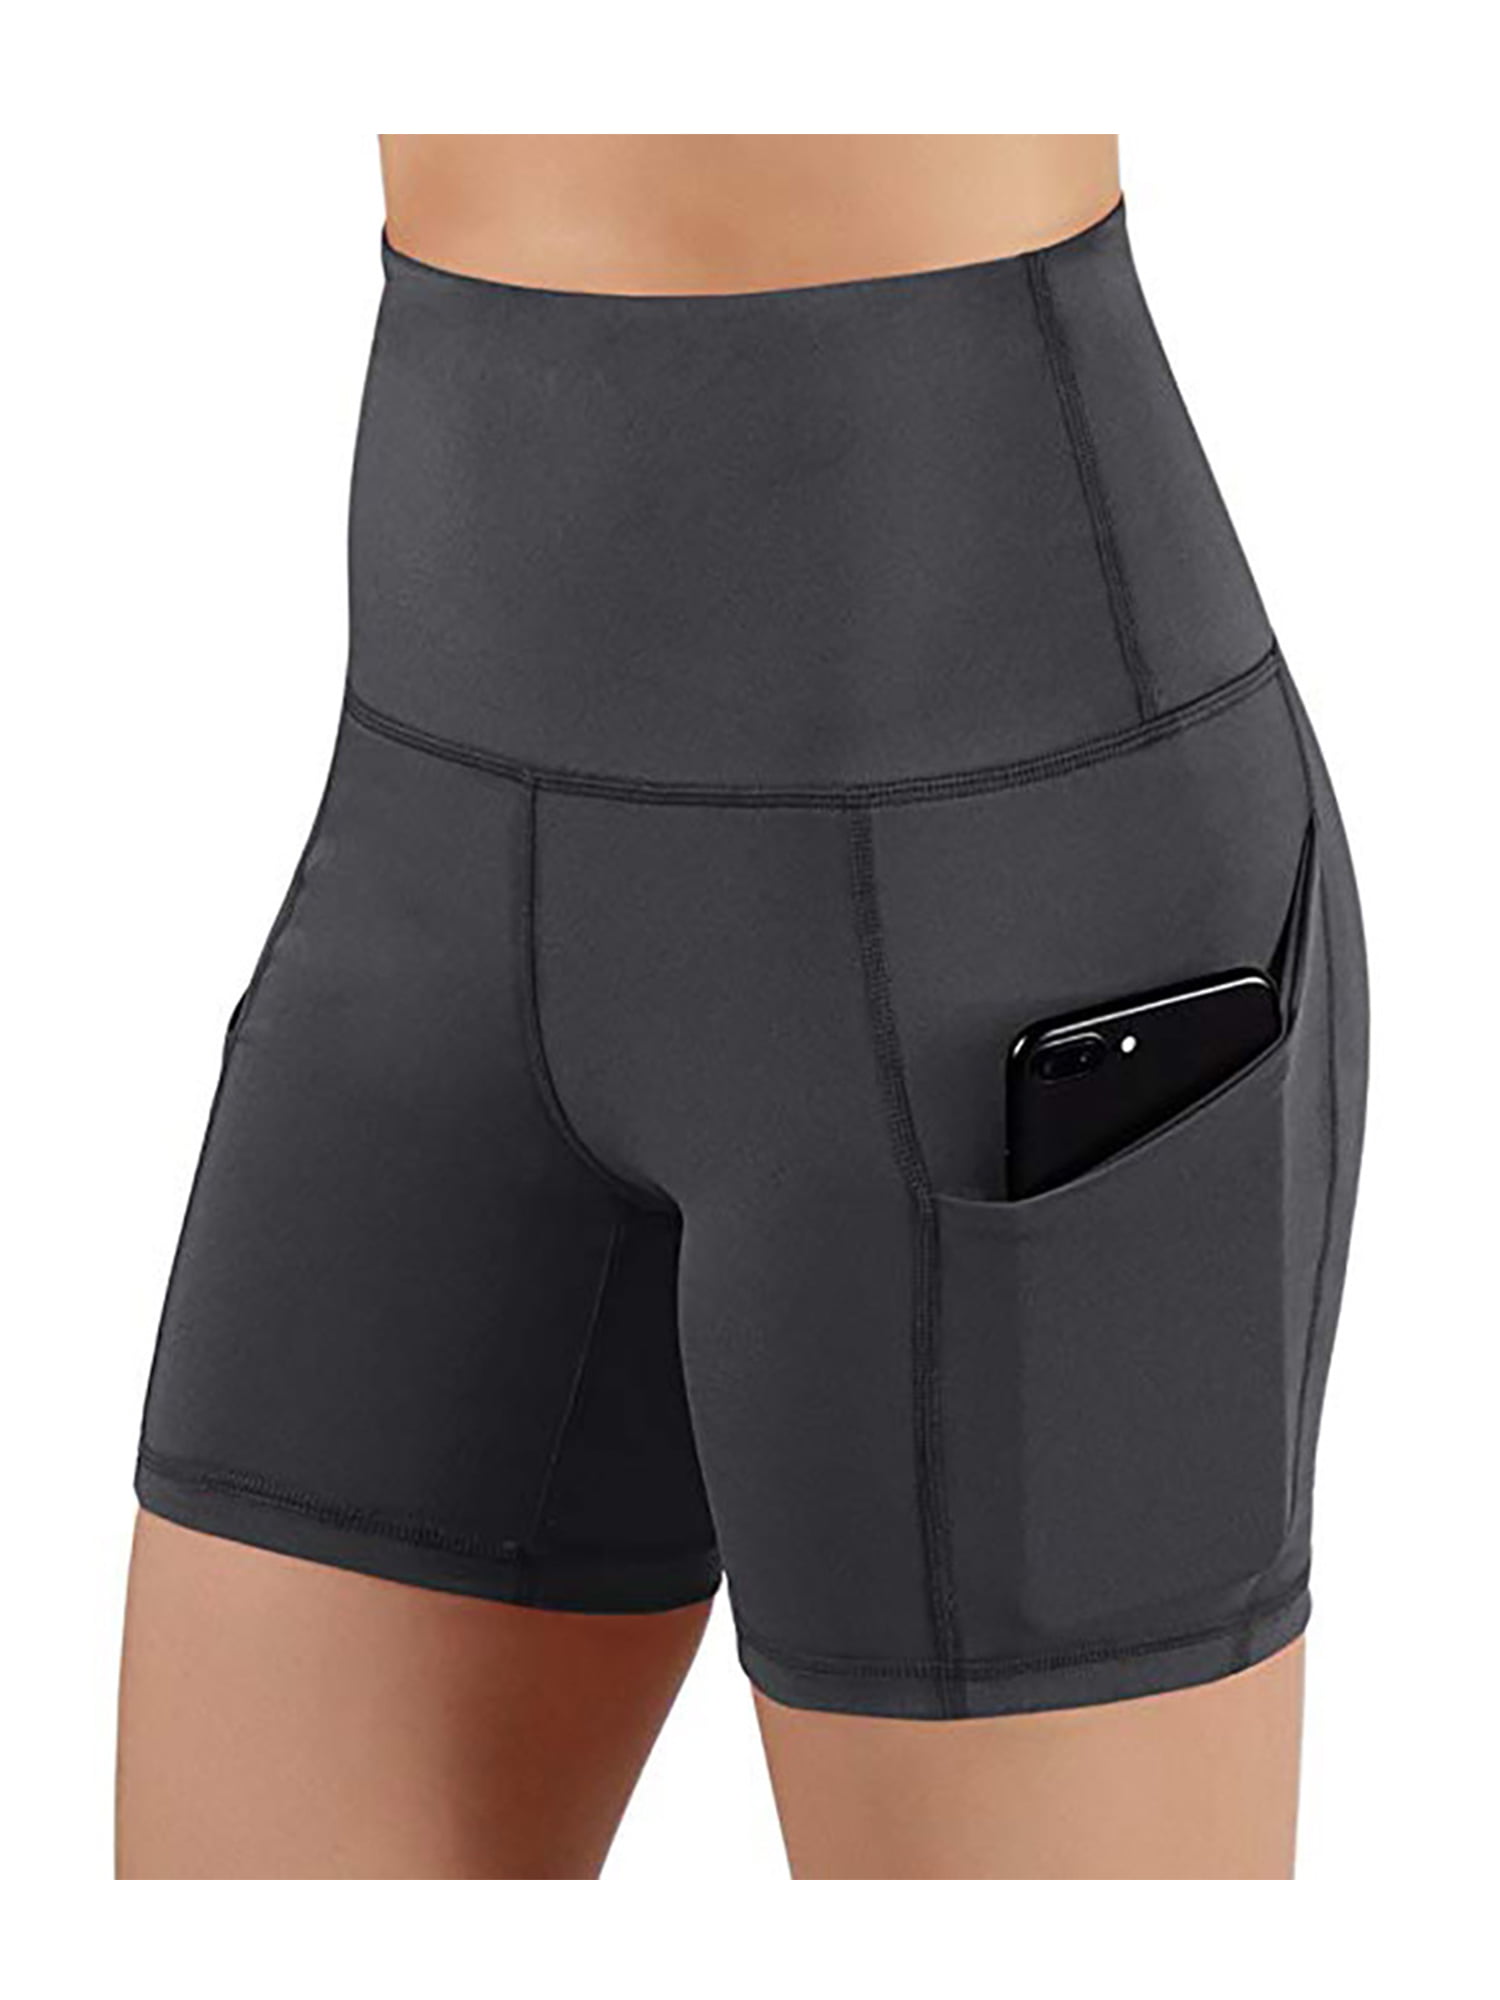 Women's Short Yoga Pockets High Waist Workout Running Shorts Tummy Control Compression Short Workout Shorts for Womens 